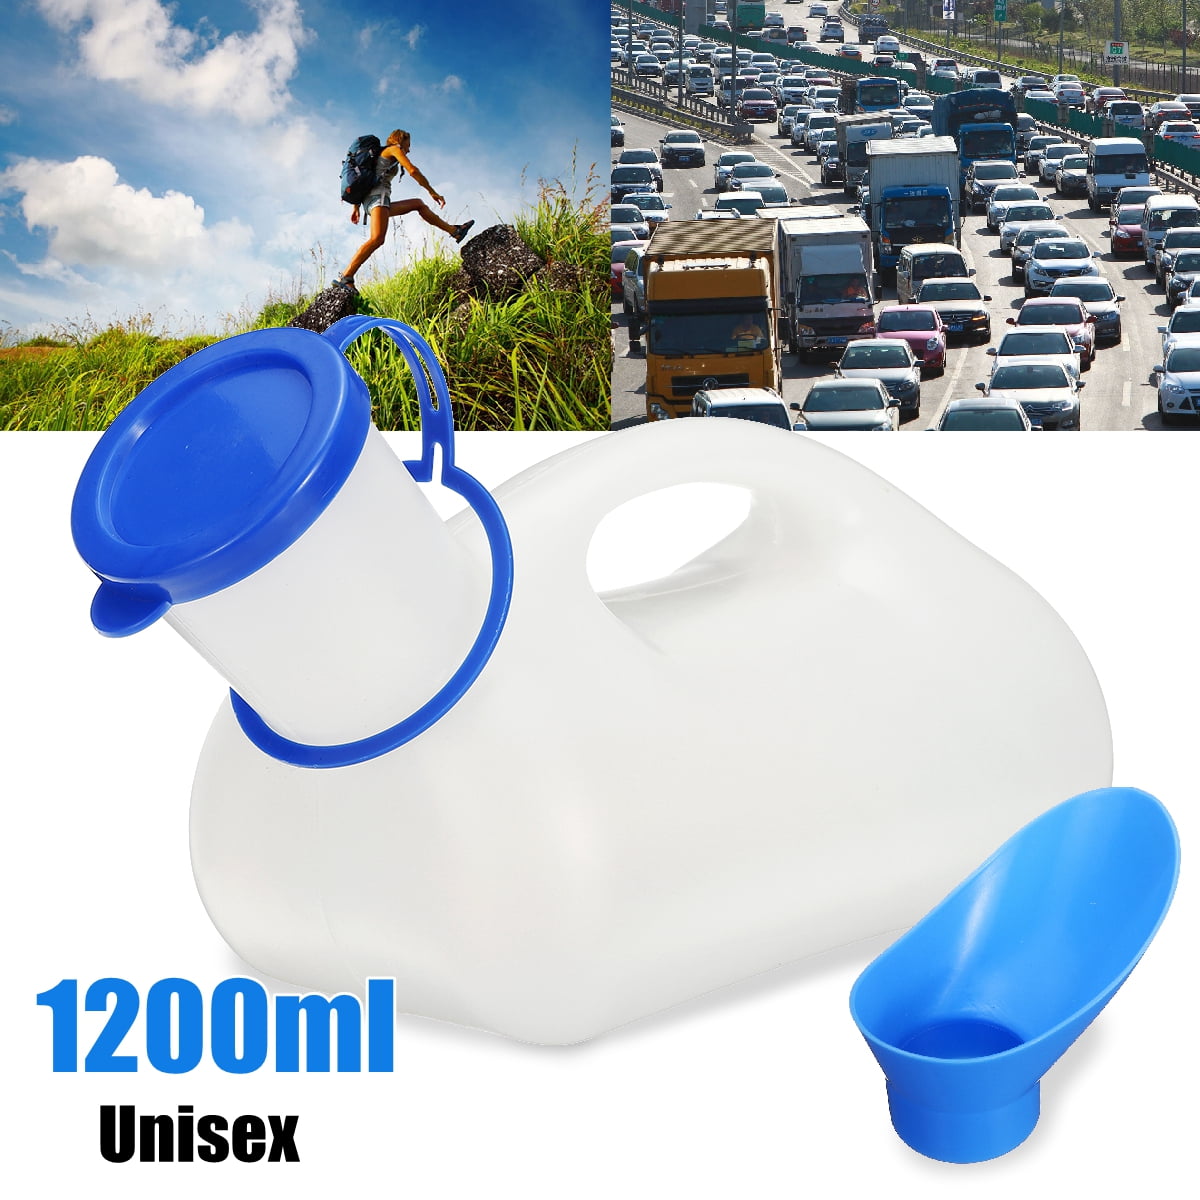 Unisex Portable Urinal Urin Toilette Ausbildung Camping Auto Travel Road 